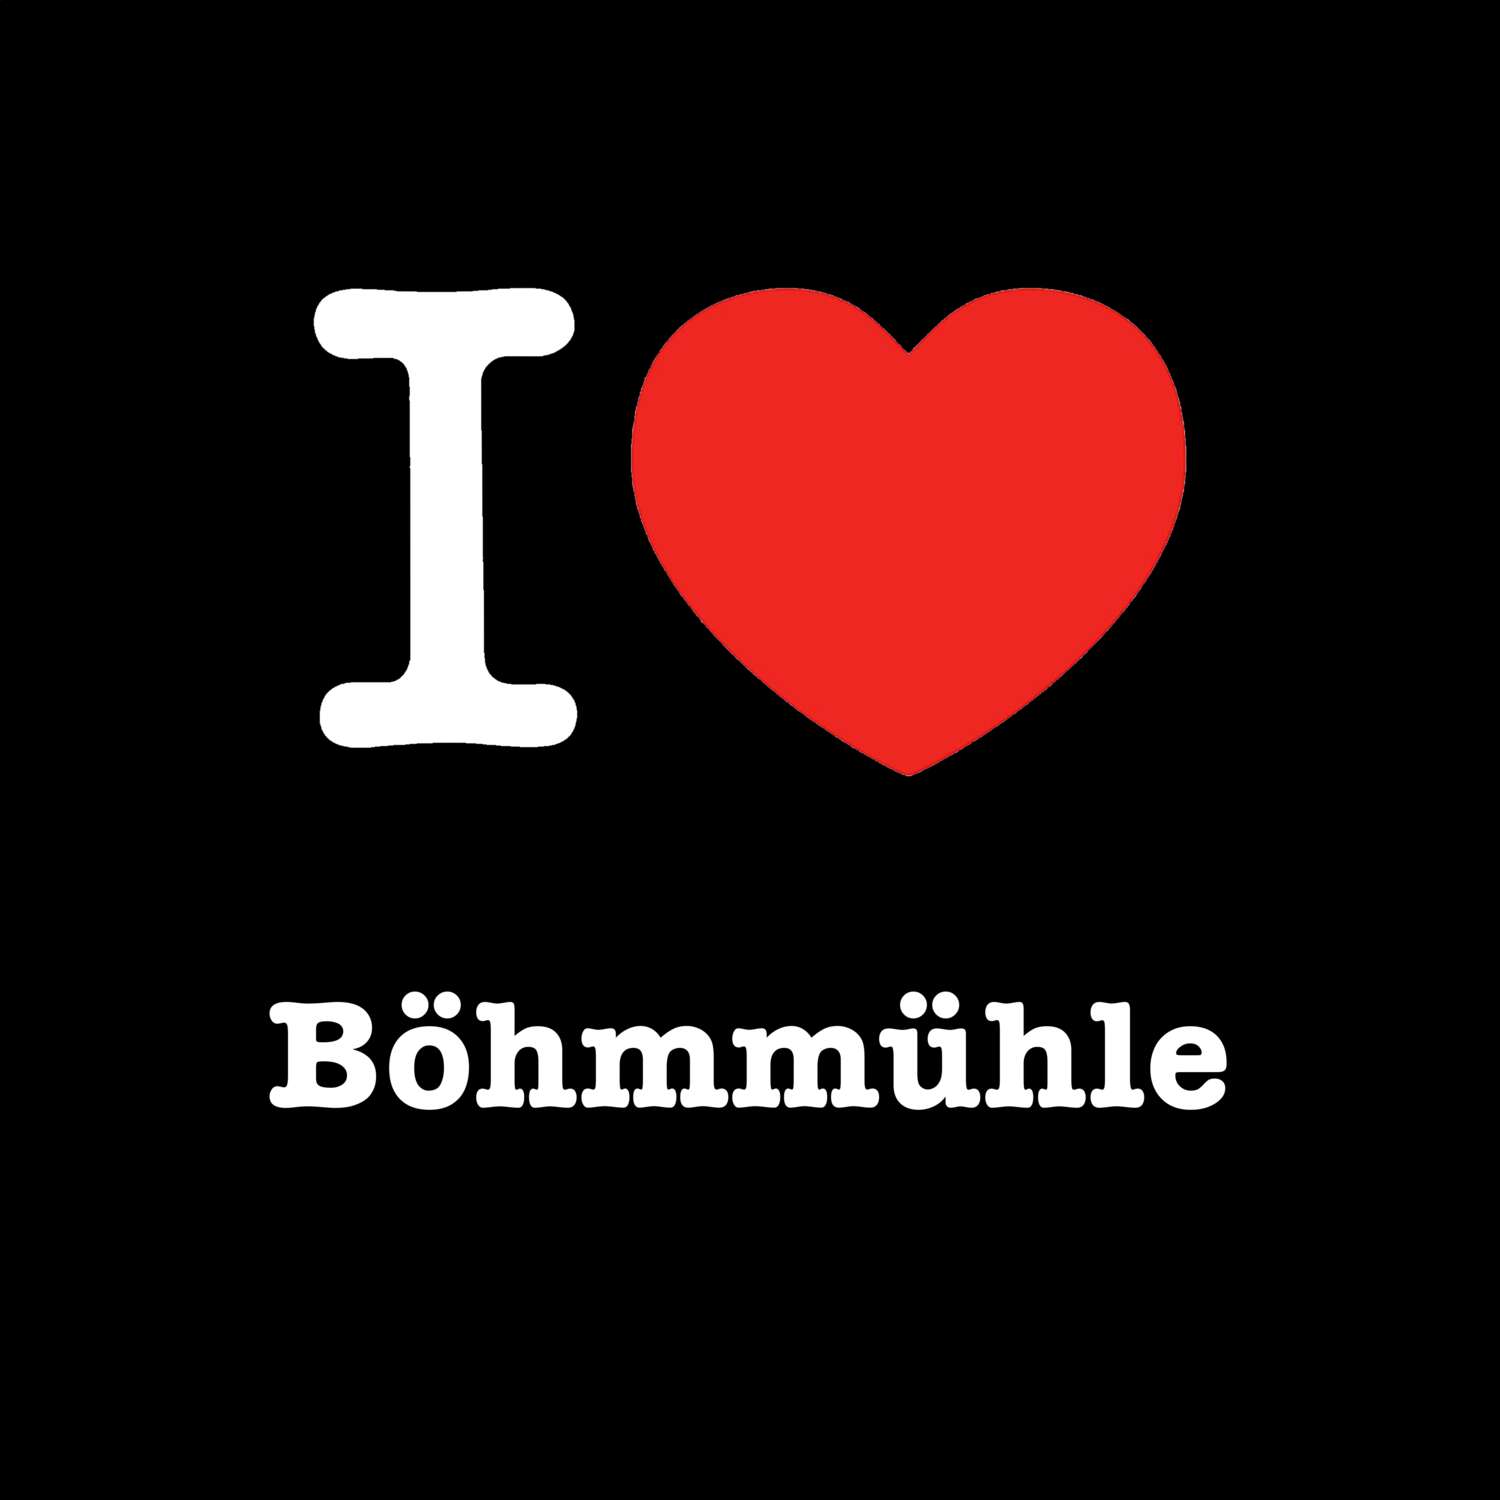 Böhmmühle T-Shirt »I love«